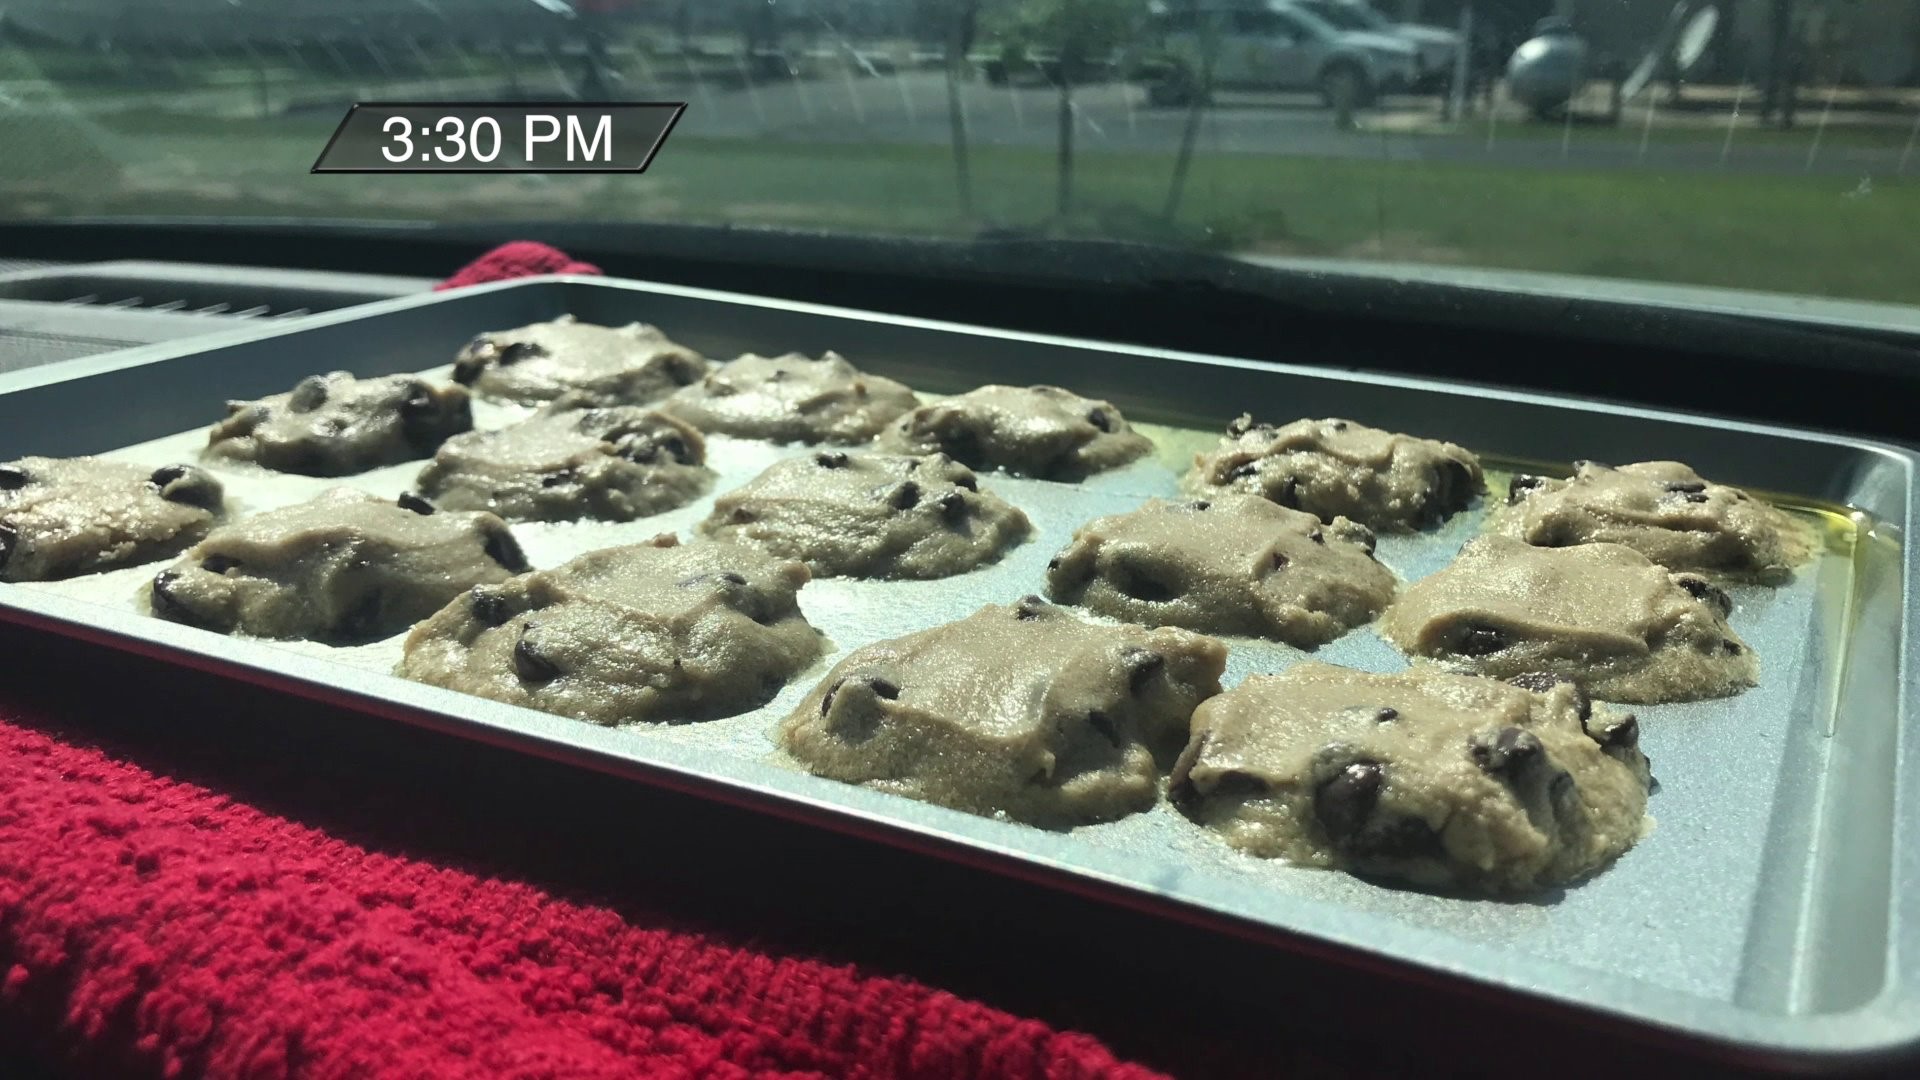 So Hot Cookies Bake Inside 174 Degree Vehicle